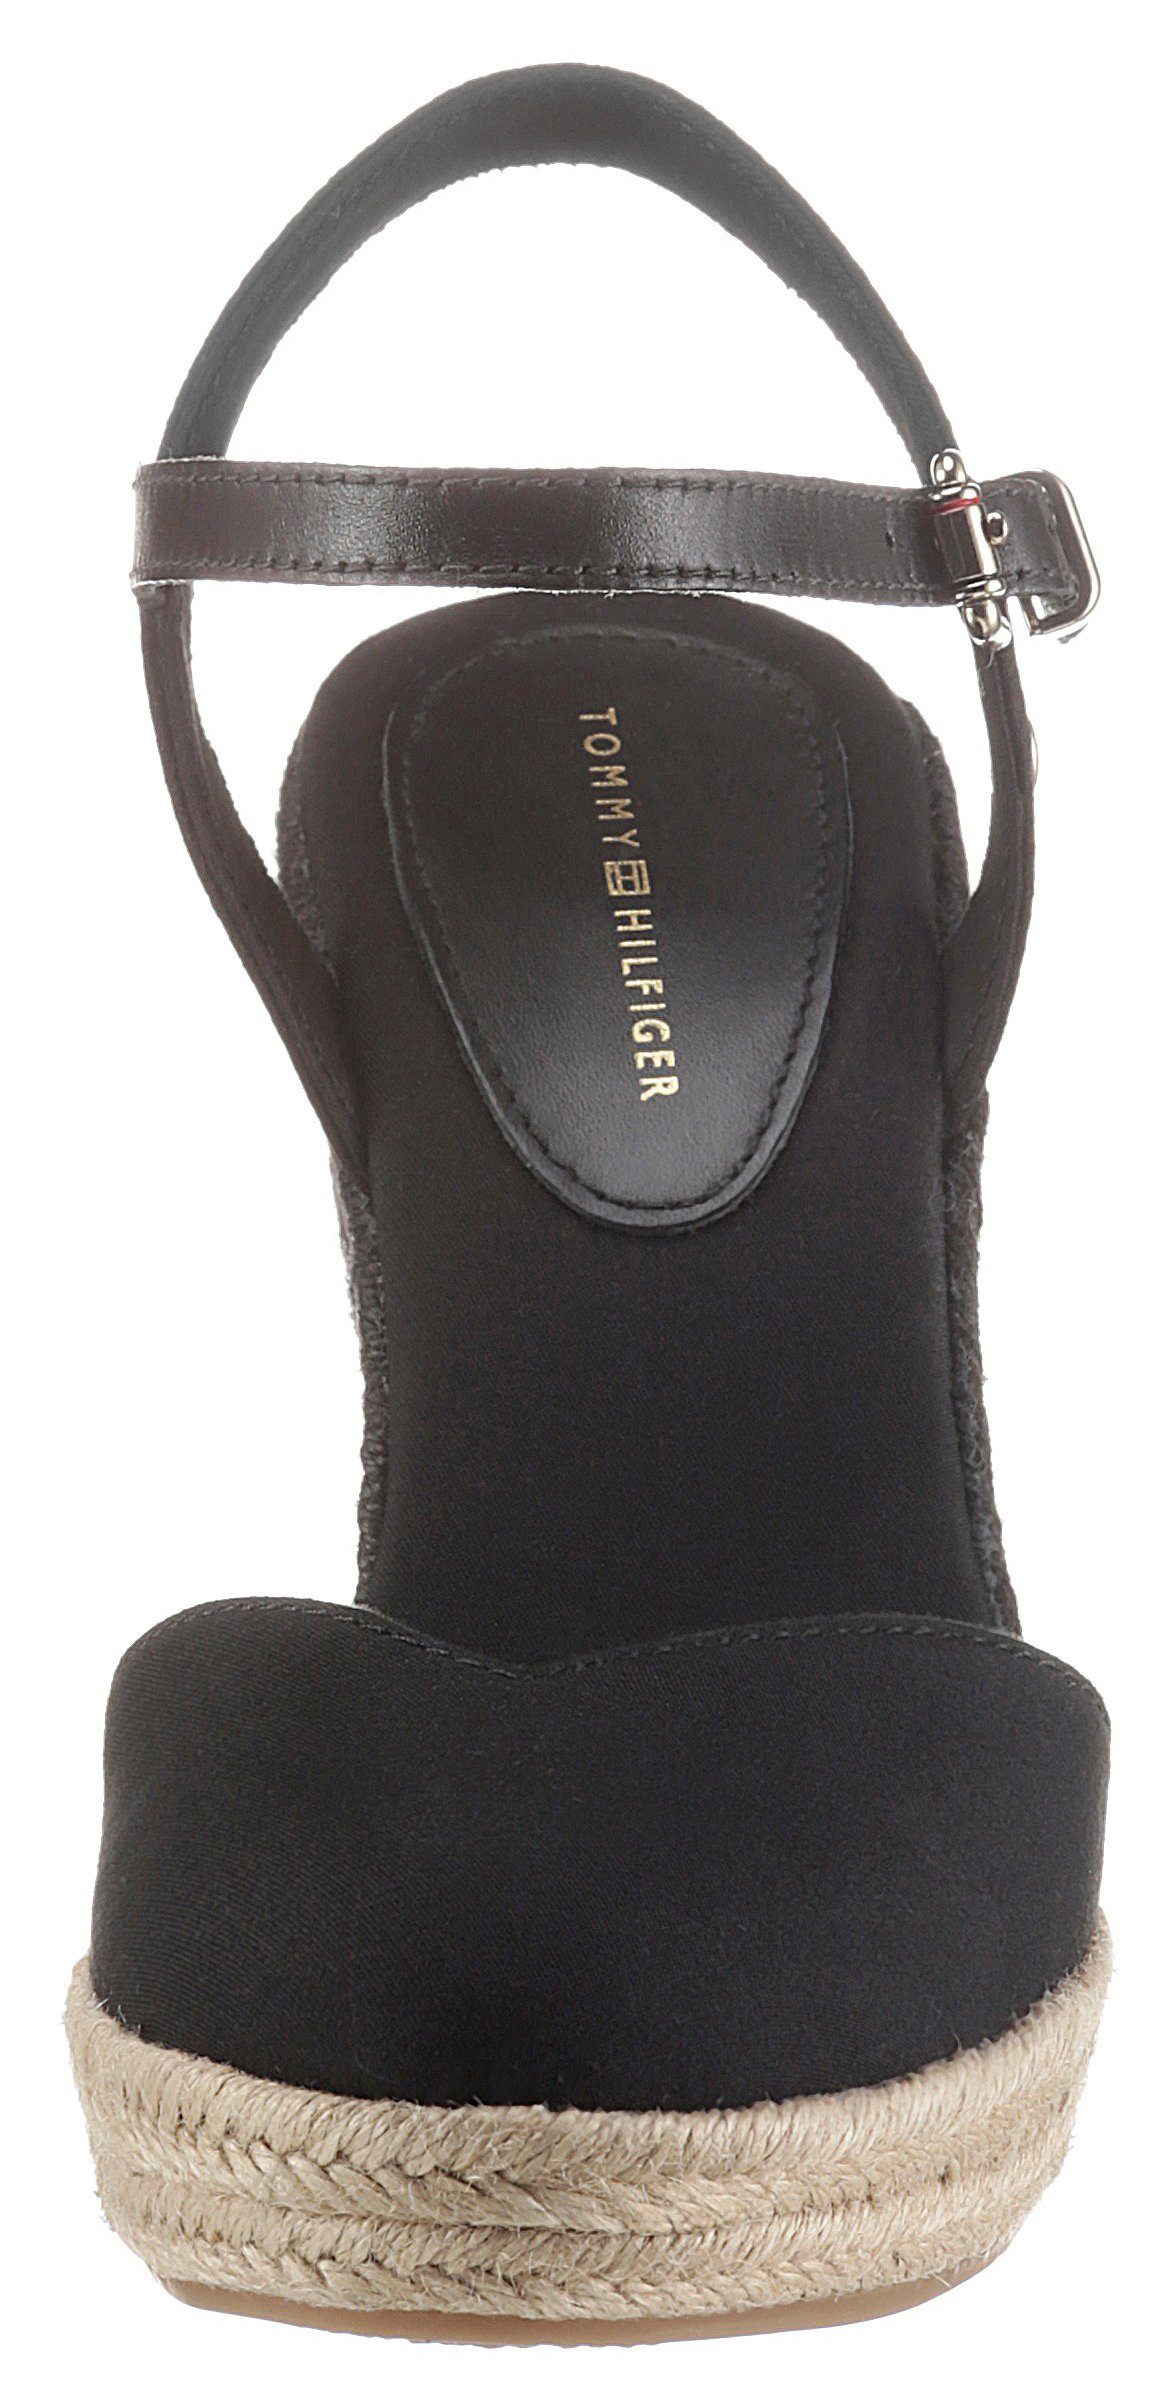 BASIC HIGH mit TOE Hilfiger Tommy WEDGE Black CLOSED Sandalette Keilabsatz bezogenem